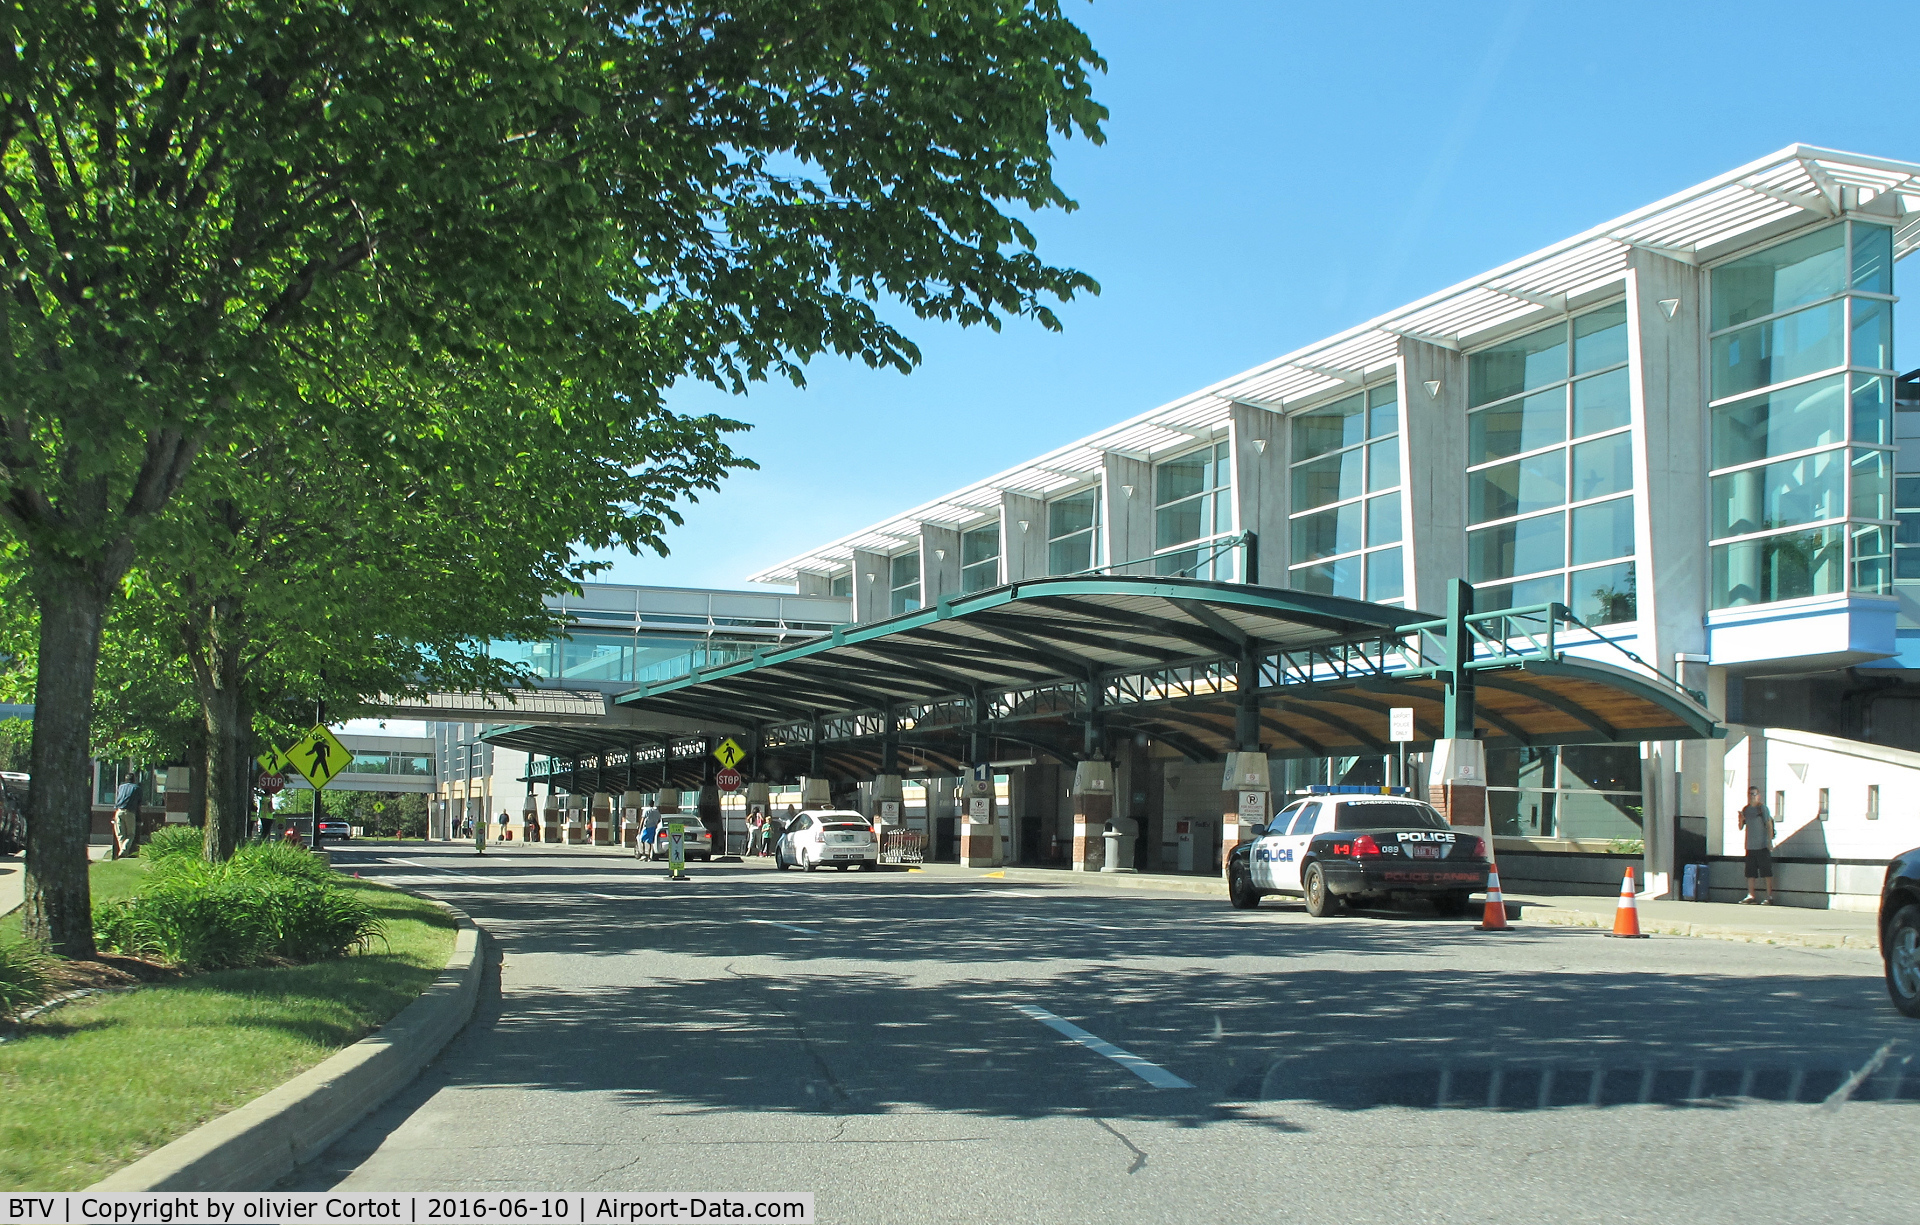 Burlington International Airport (BTV) - the airport terminal